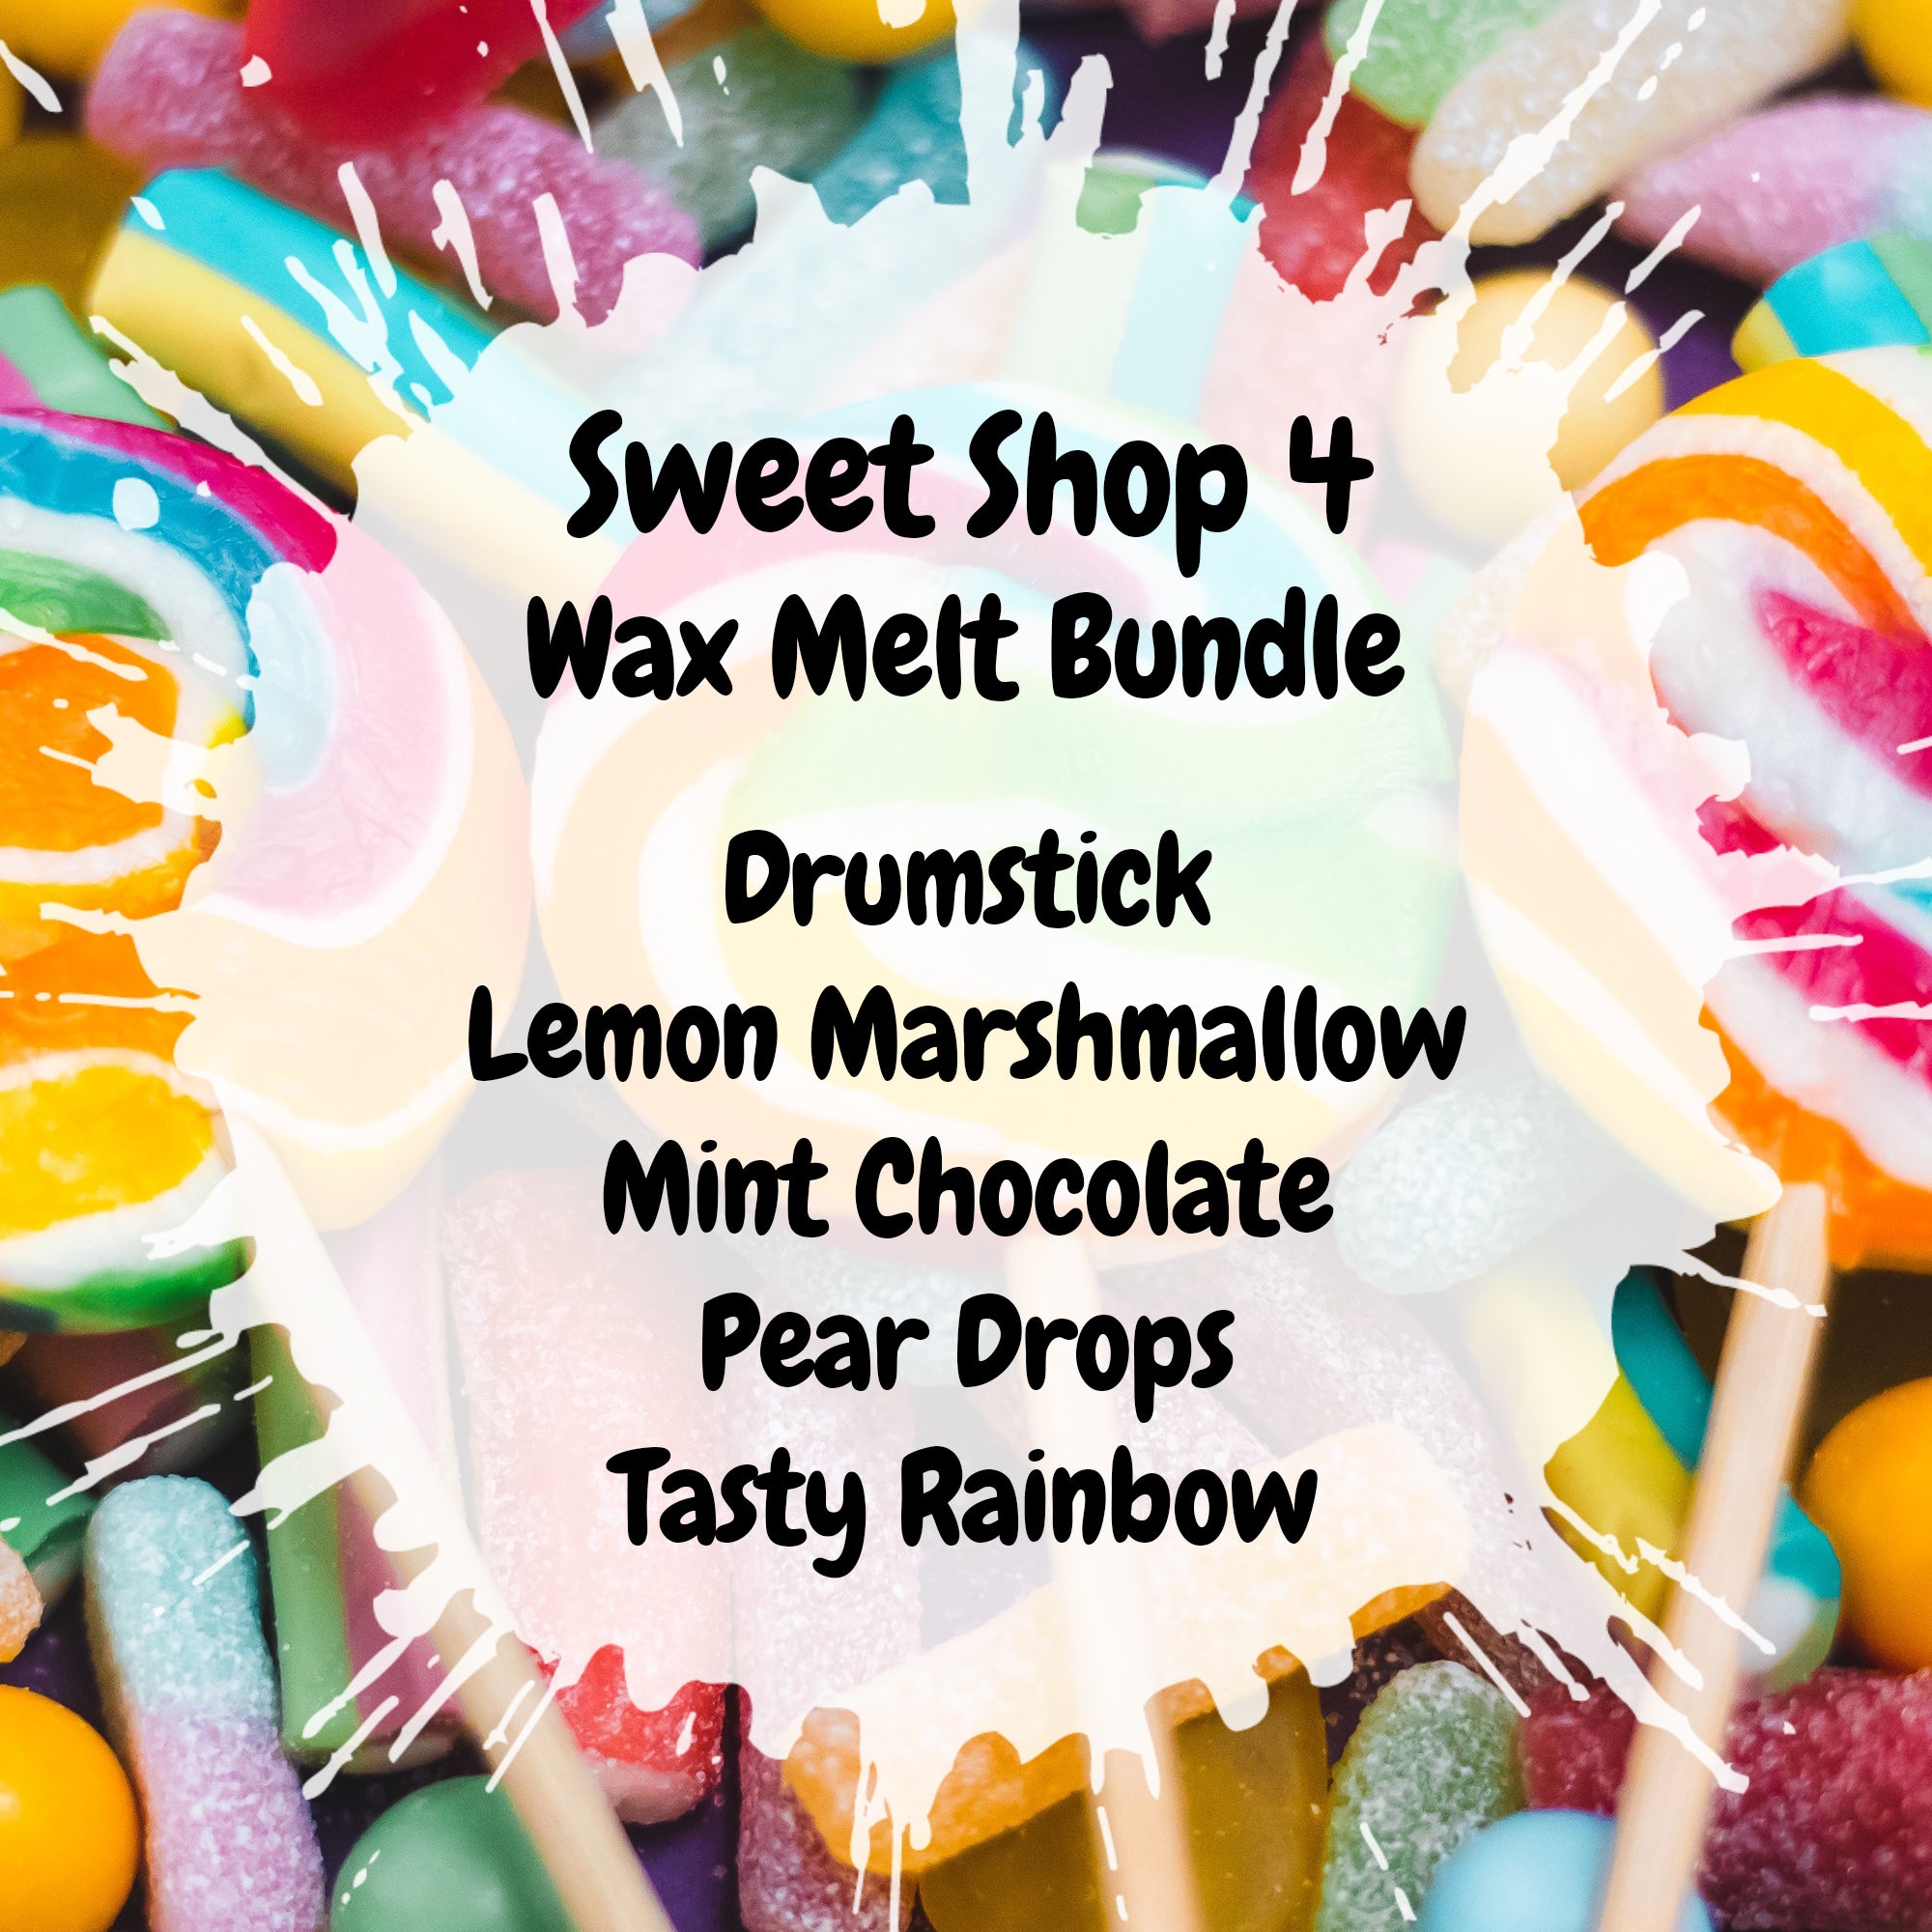 Sweet Shop 4 Wax Melt Bundle